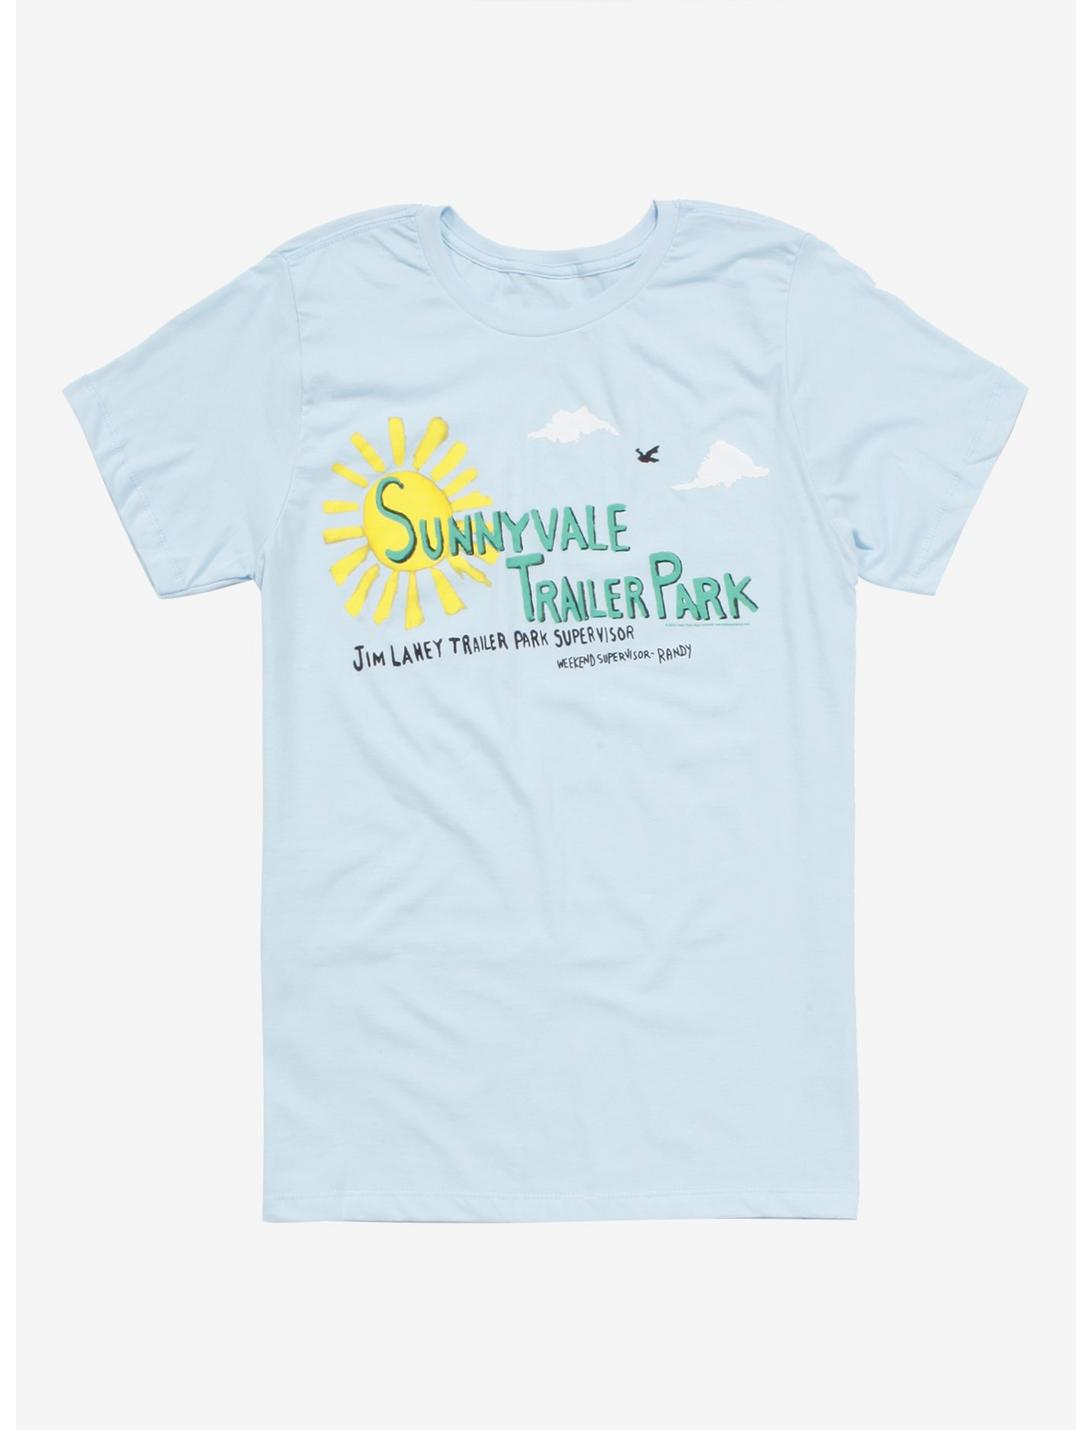 Trailer Park Boys Sunnyvale T-Shirt, BLUE, hi-res